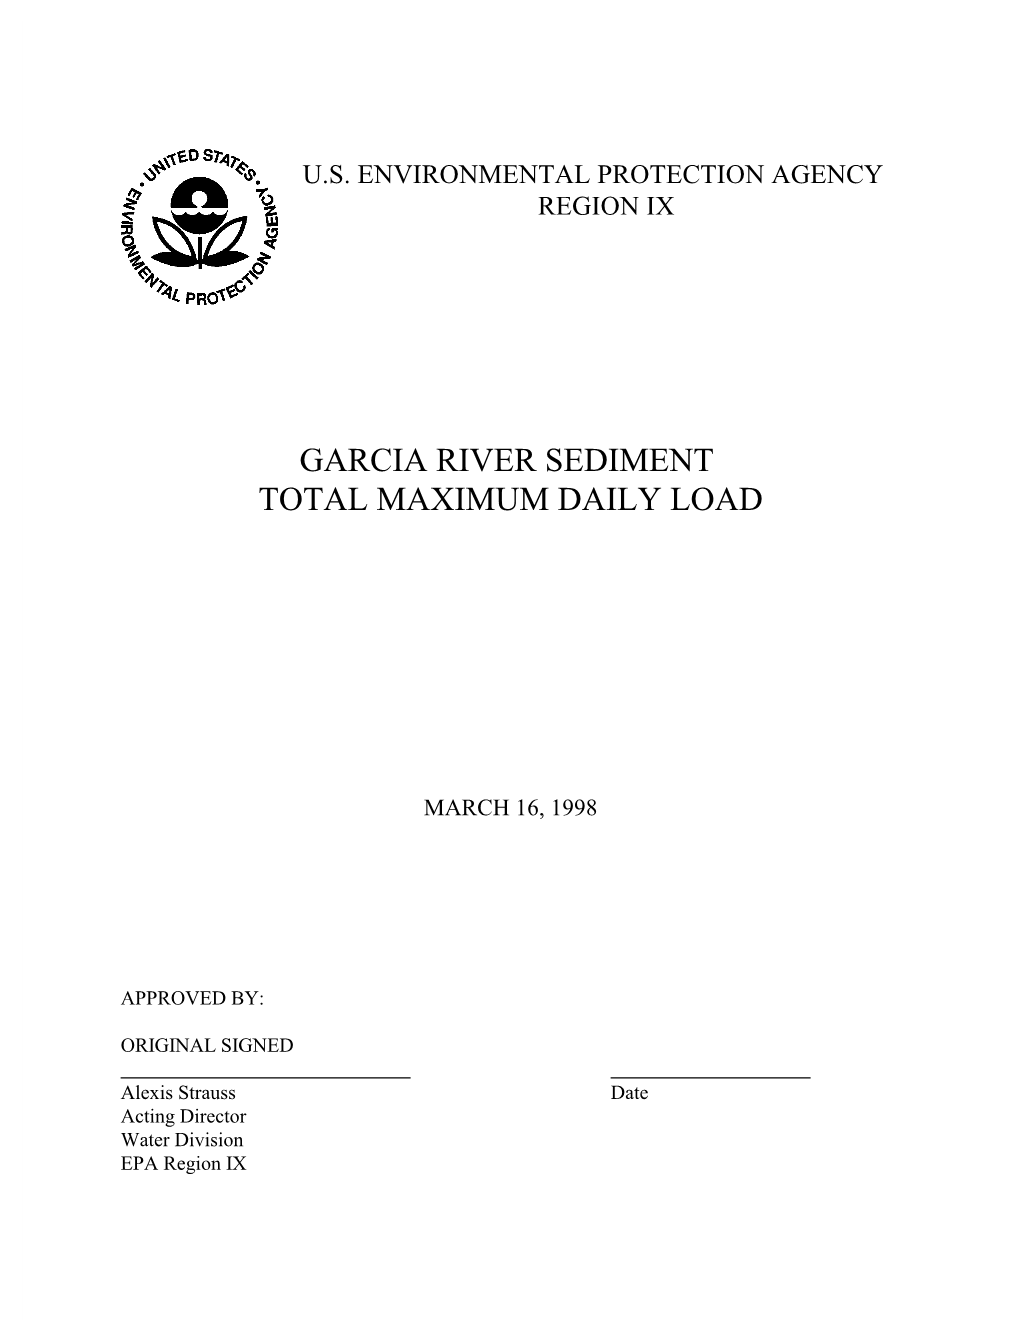 Garcia River Sediment Total Maximum Daily Load